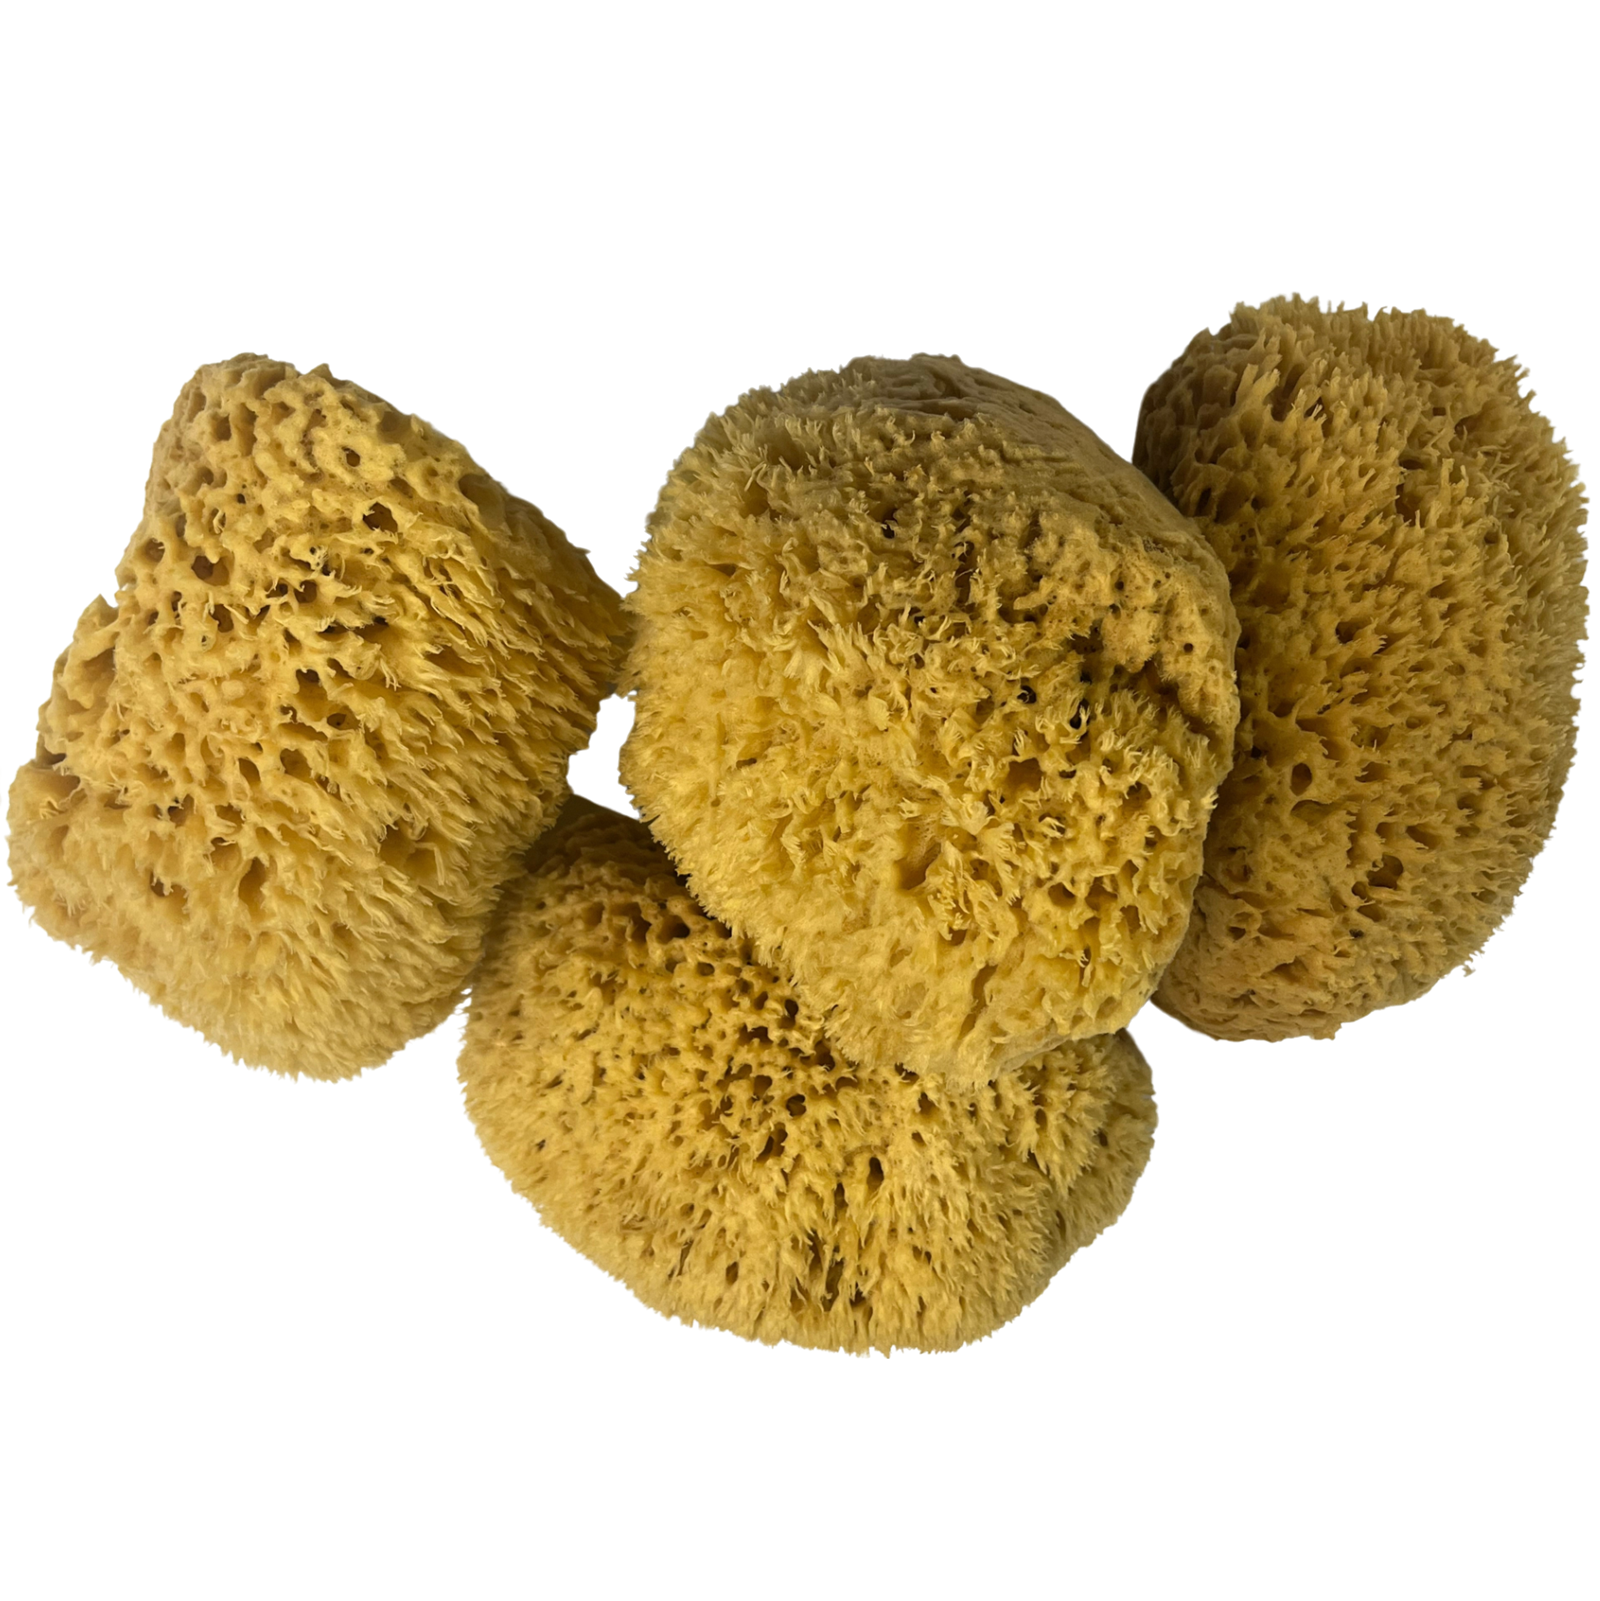 Florida Natural Sea Sponge (22-1M): Florida Natural Sponges